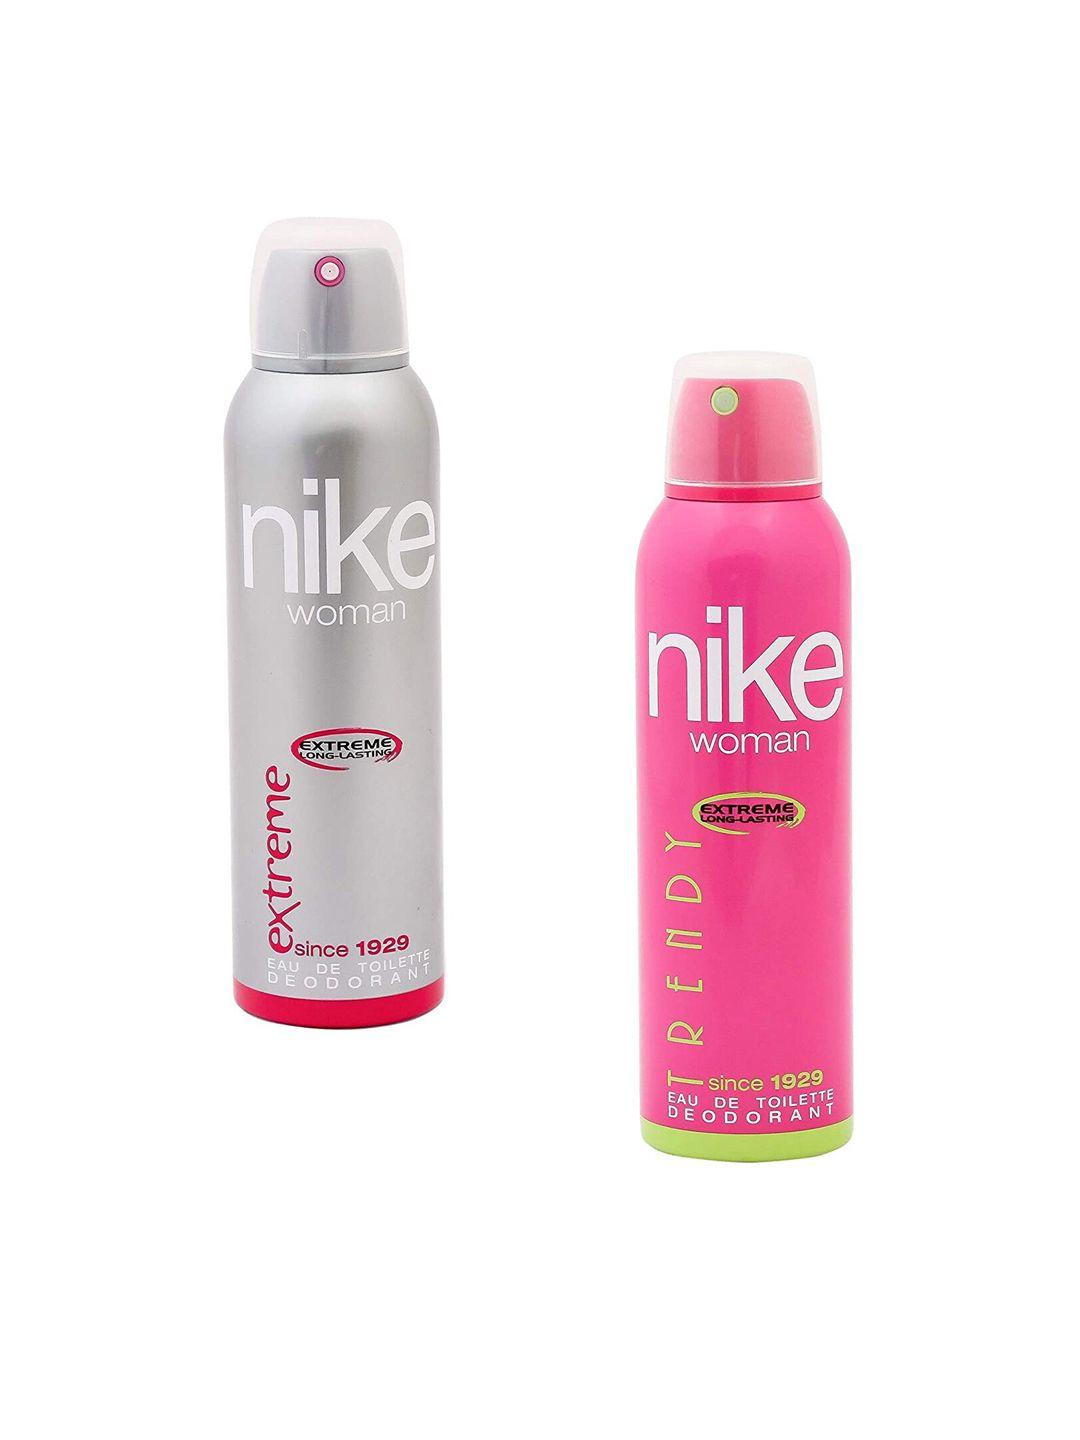 nike-woman-set-of-2-eau-de-toilette-deodorants-200ml-each---extreme+trendy